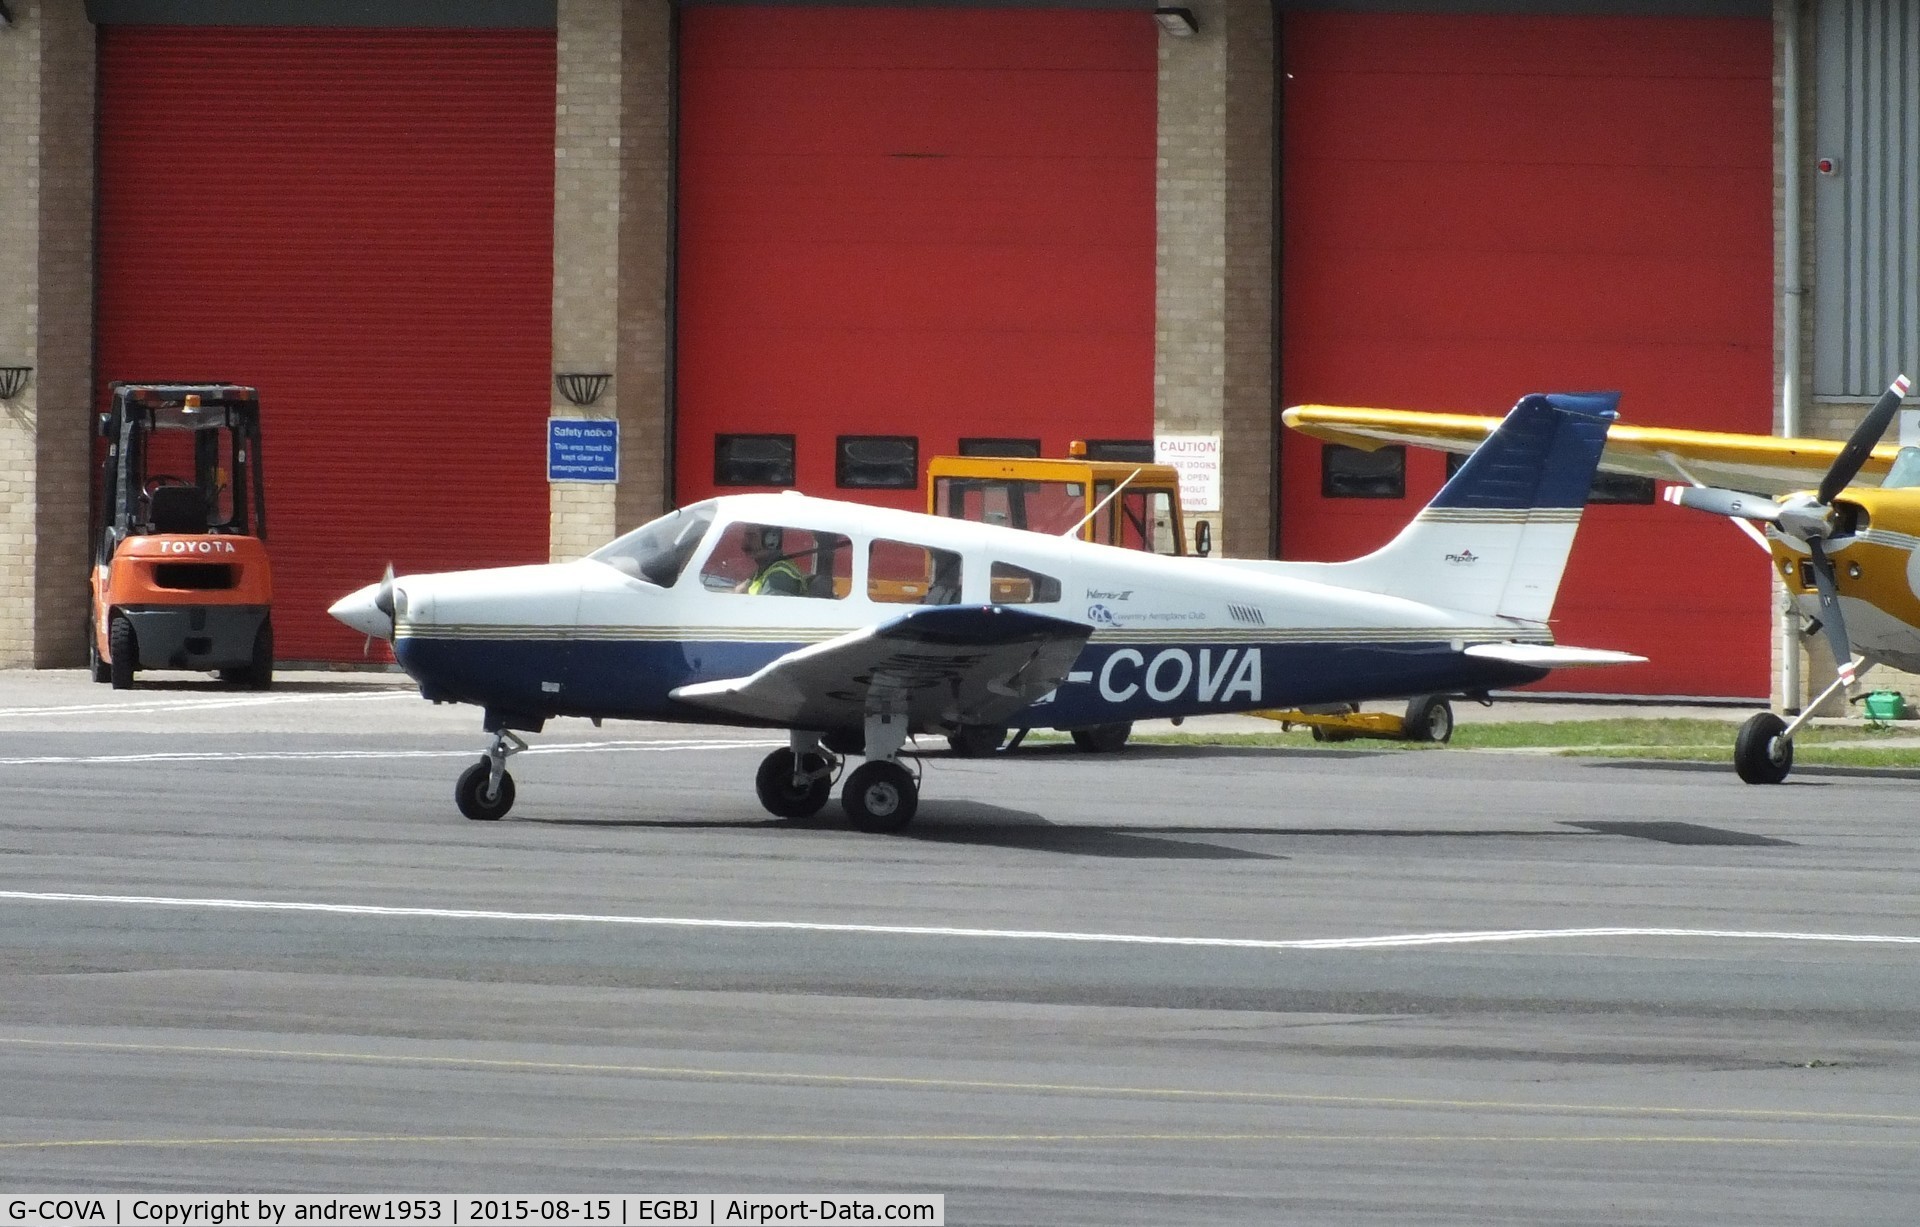 G-COVA, 2004 Piper PA-28-161 Warrior III C/N 2842217, G-COVA at Gloucestershire Airport.